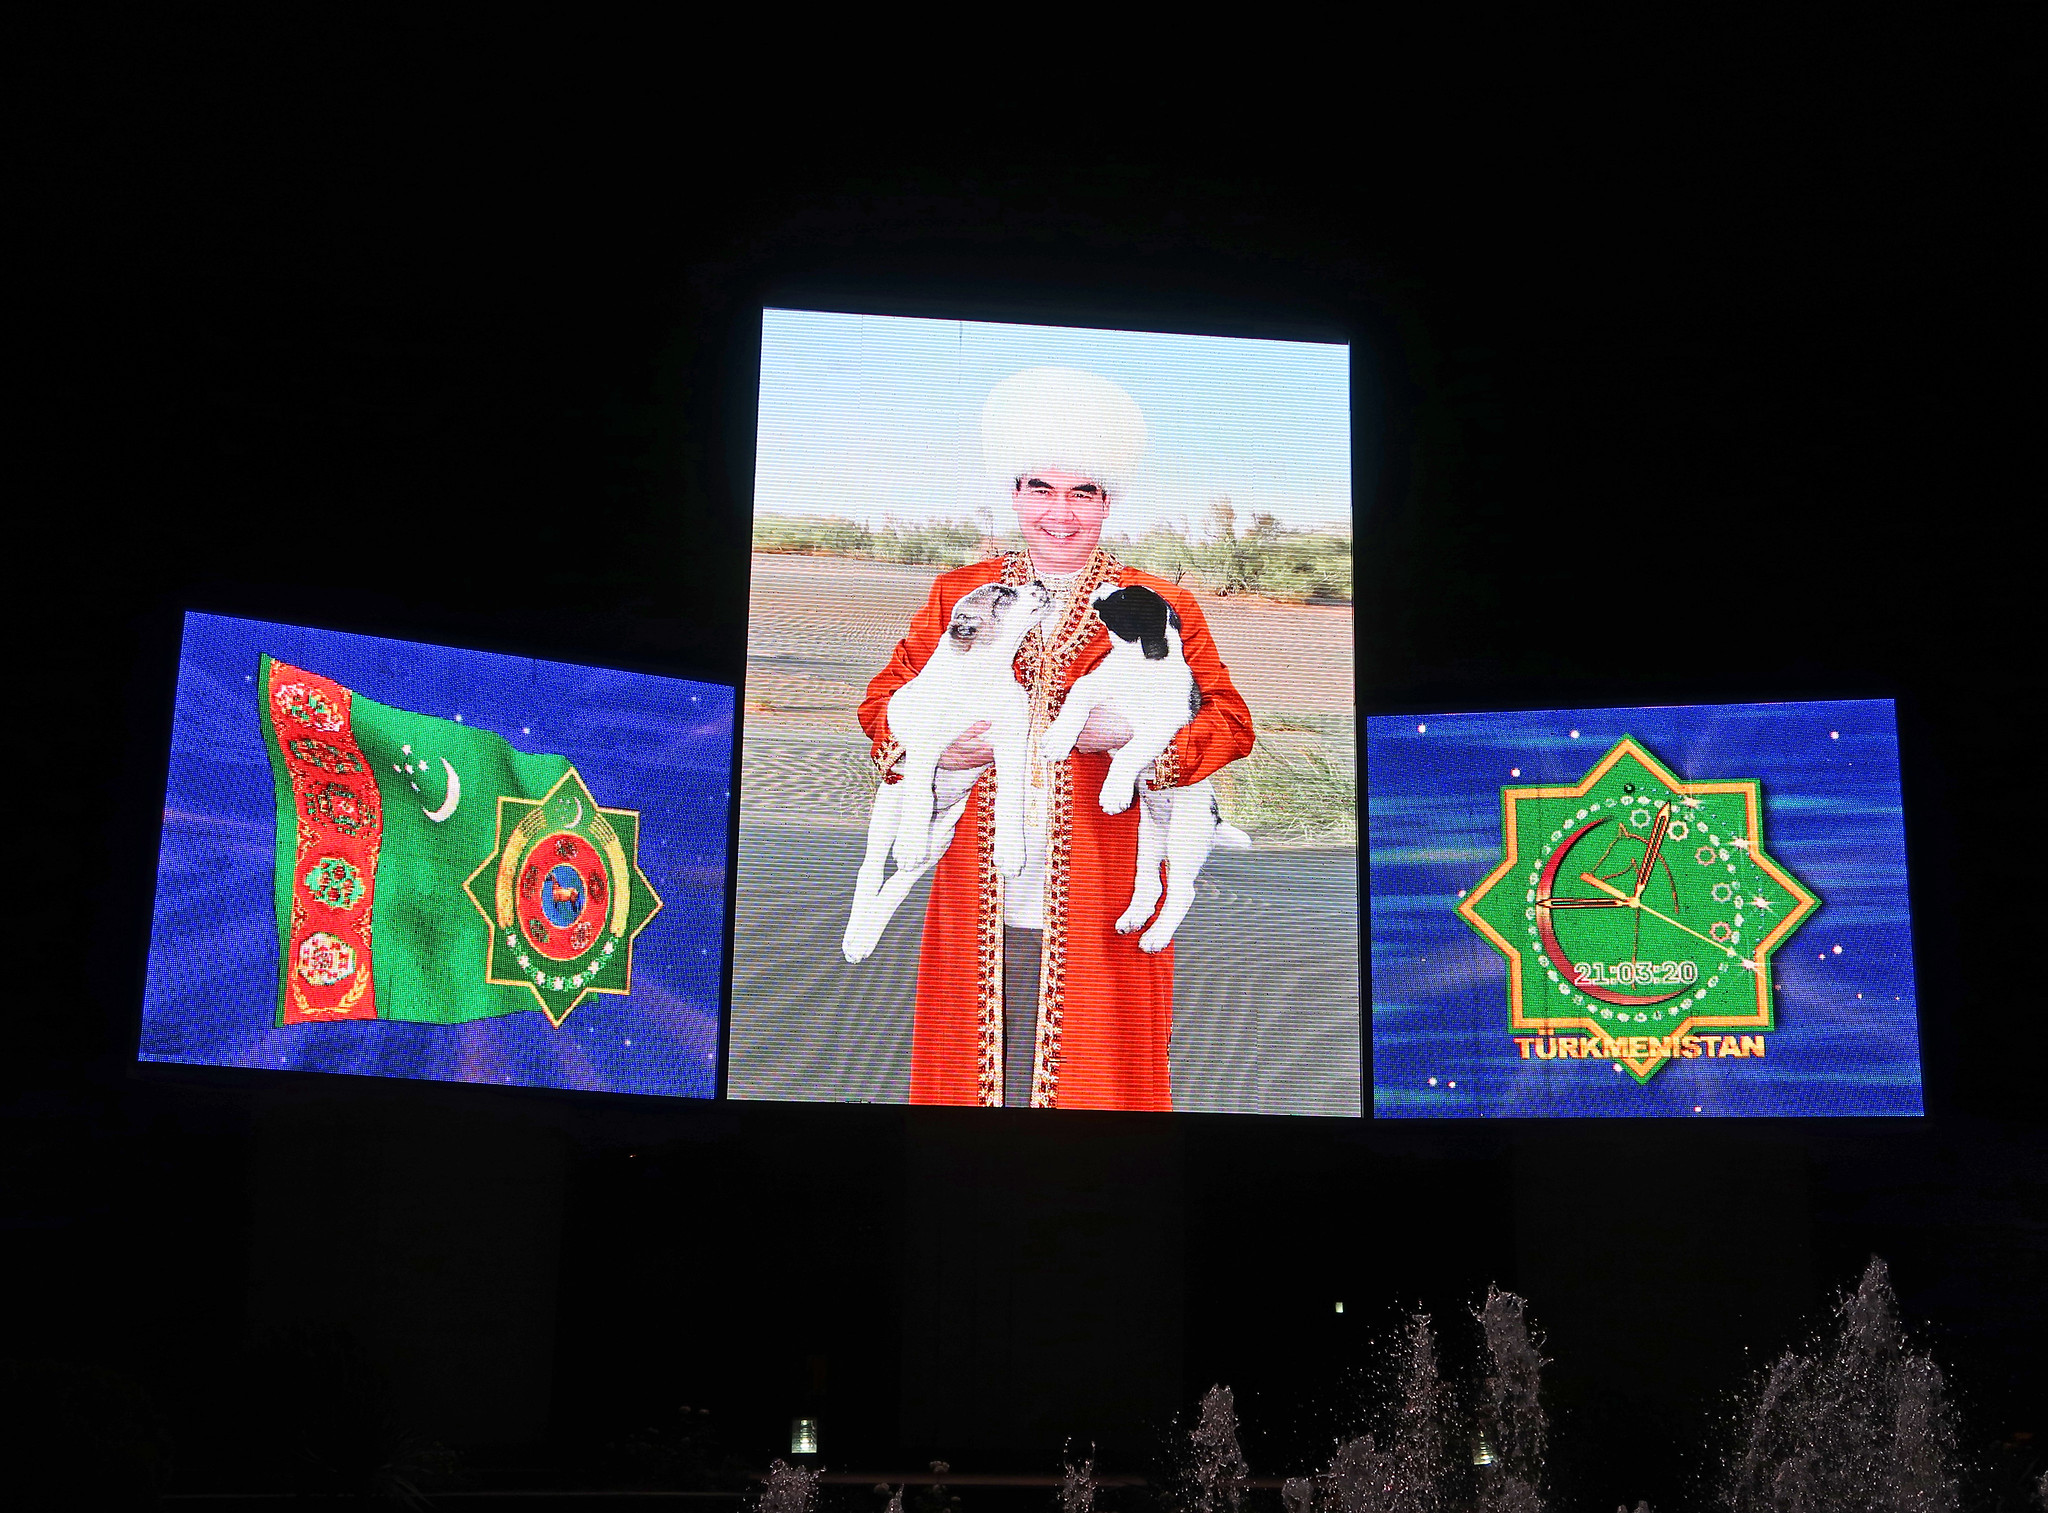 a-billboard-featuring-turkemistan-president-gurbanguly-berdimuhamedow-photo-credit-john-pavelka-on-flickr